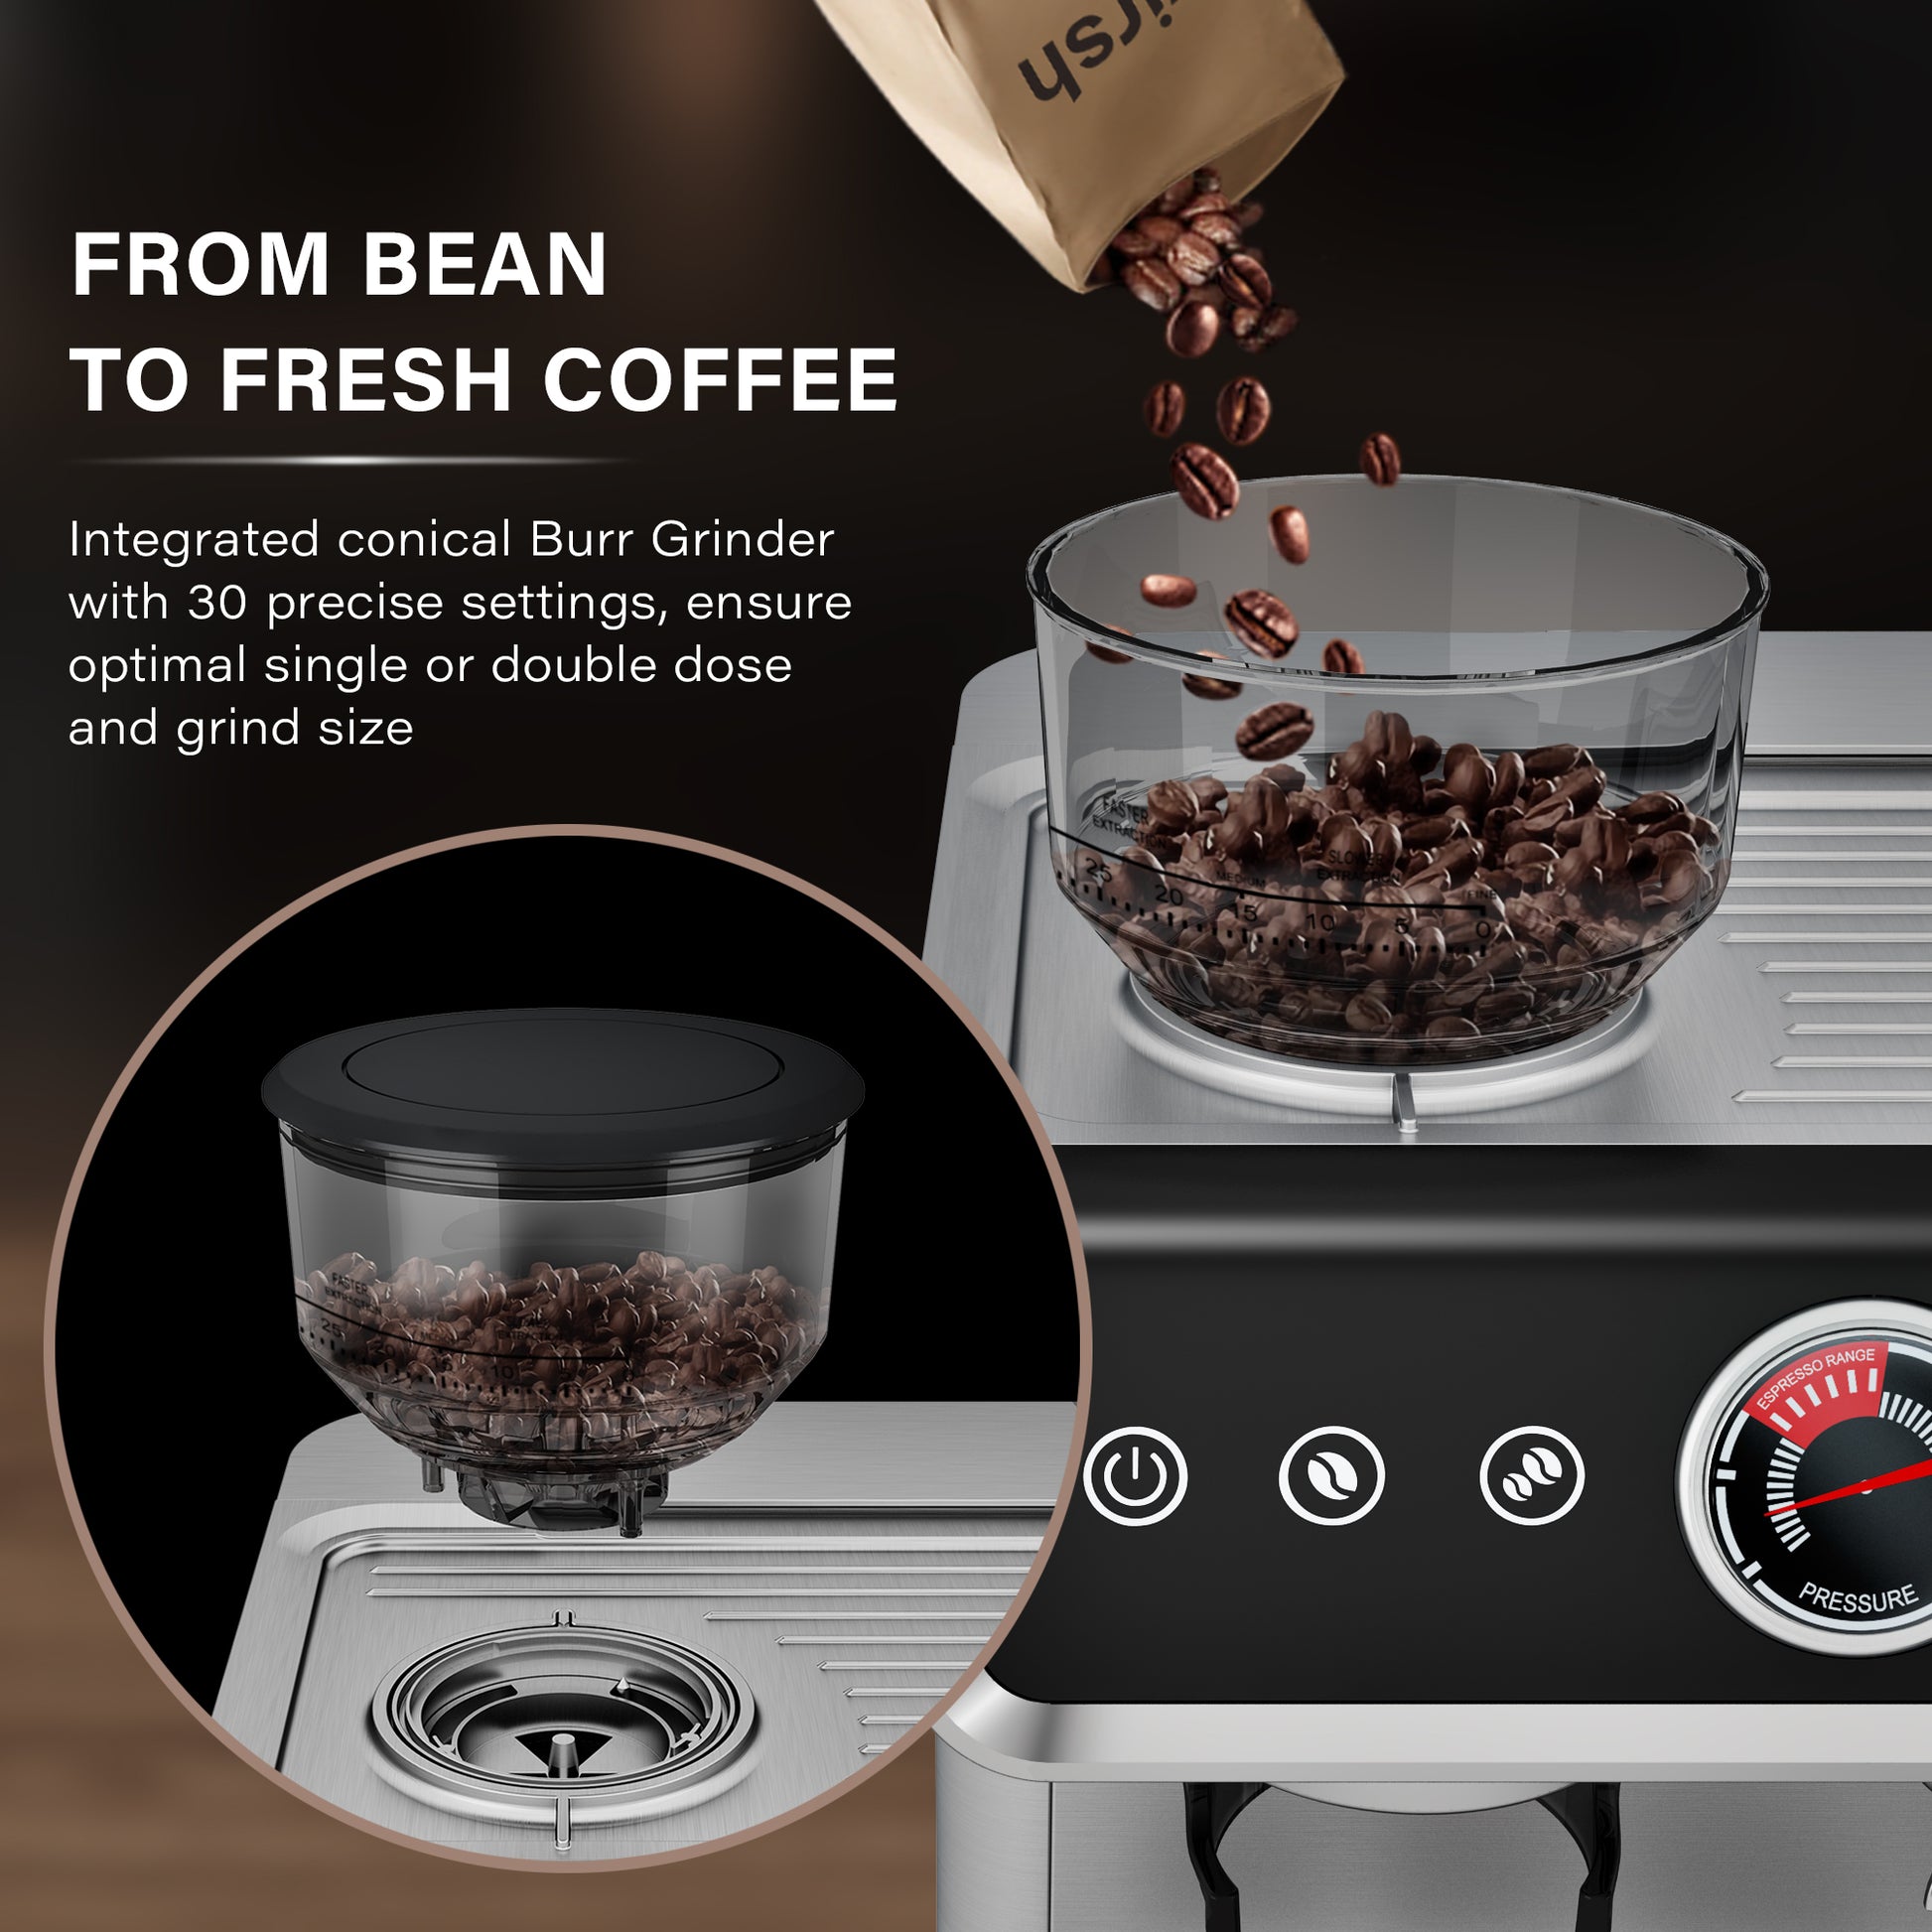 <img src="espresso machine.jpg" alt="wirsh 30 settings coffee grinder"/>